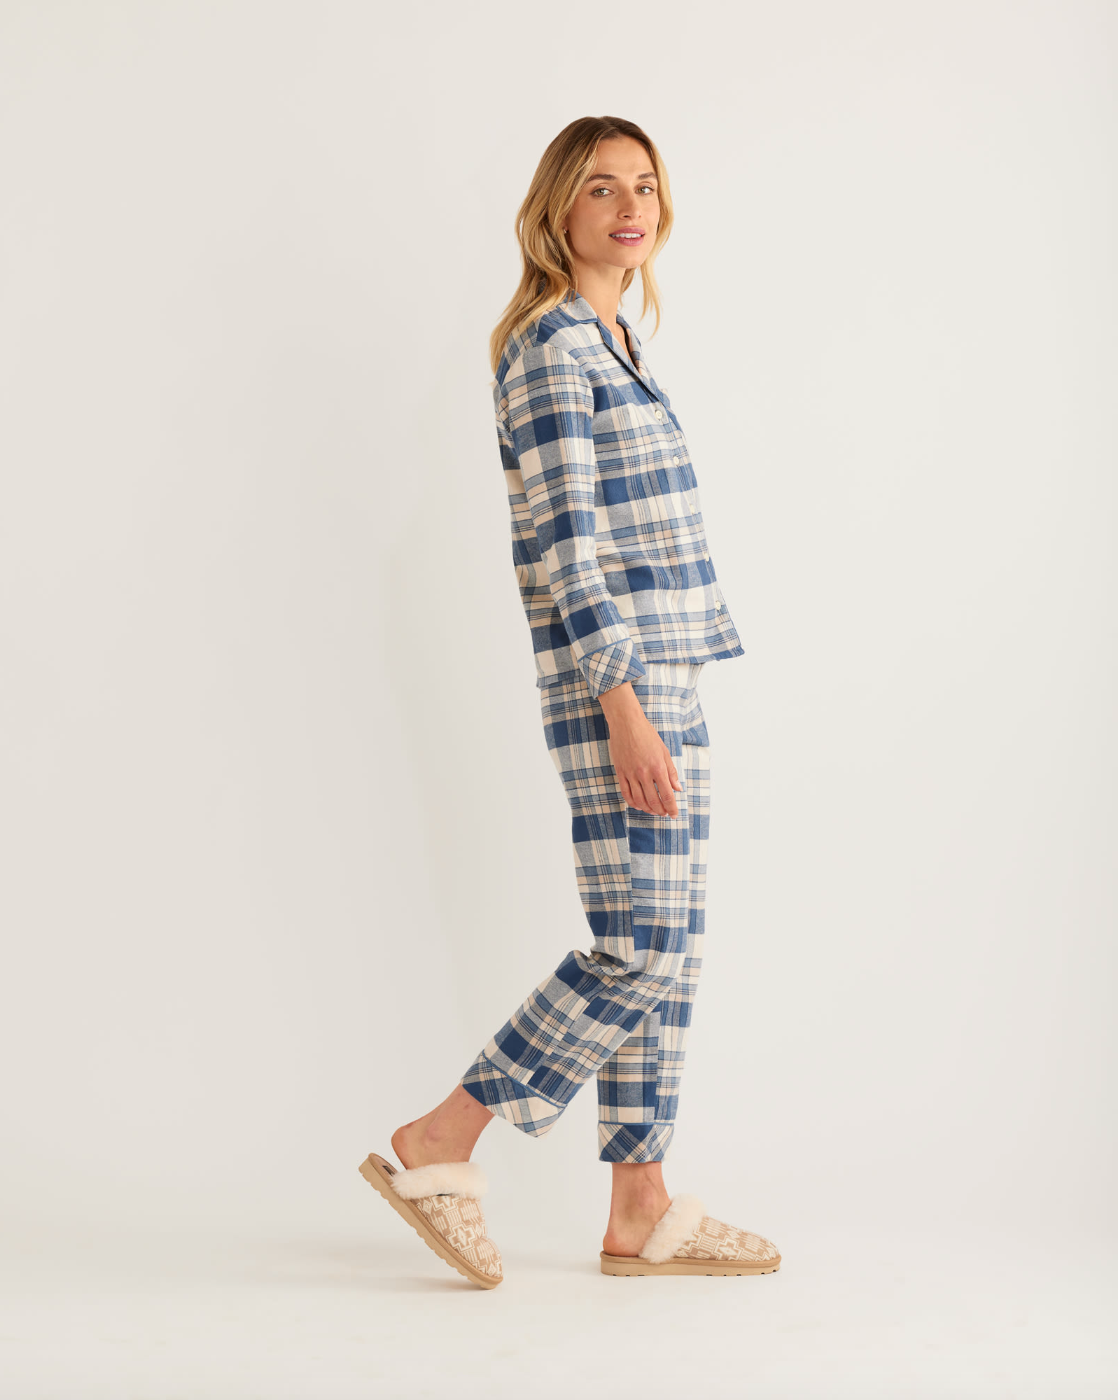 Women's Pajama SetIvory Scout Stripe